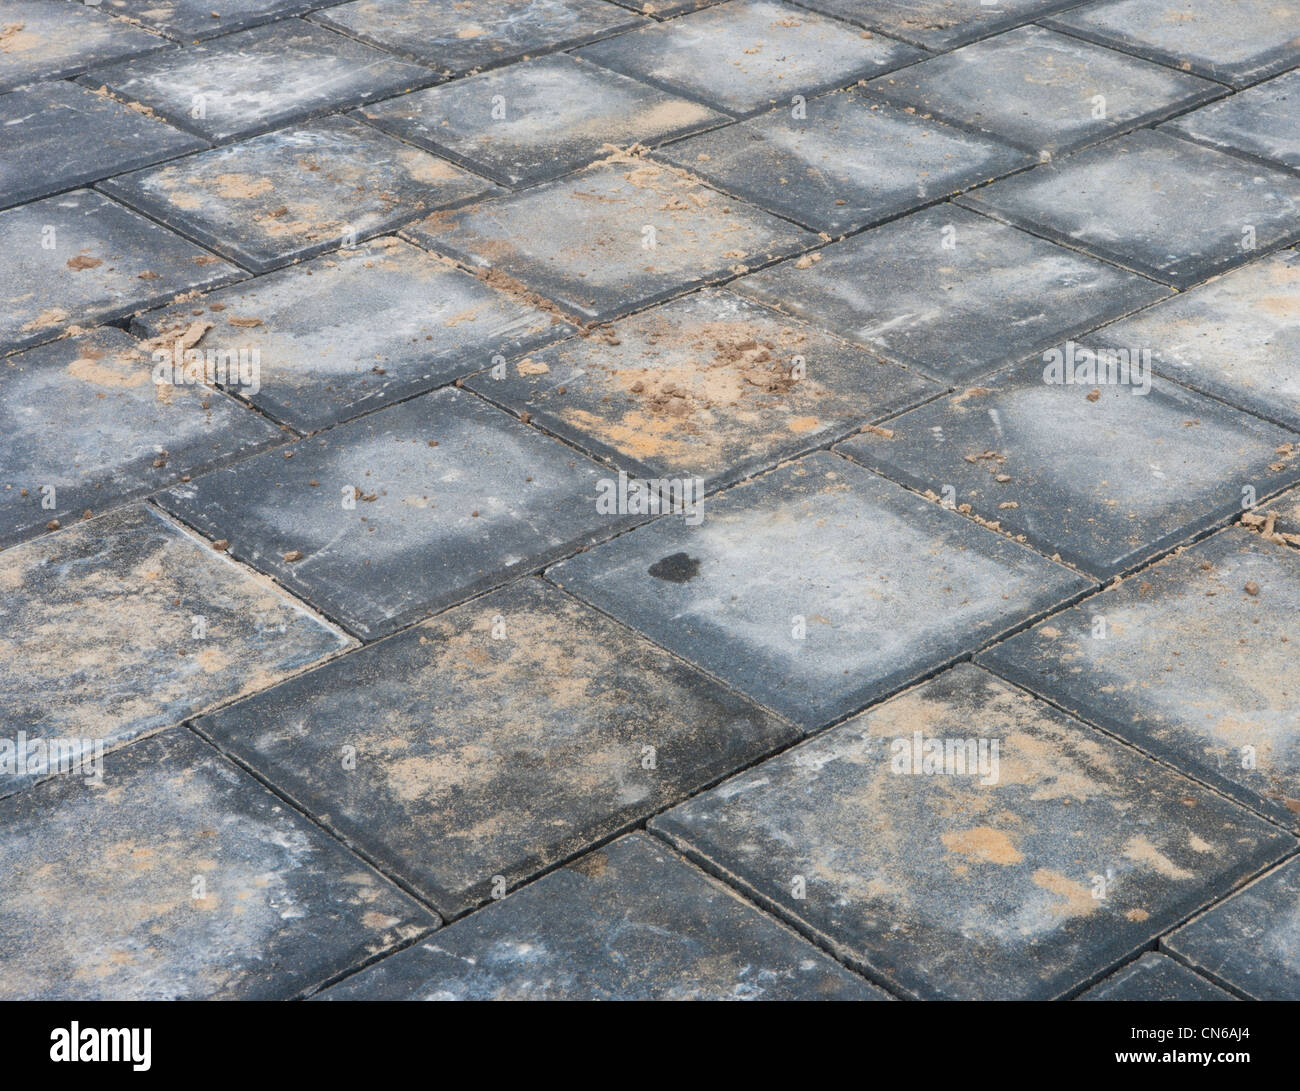 newly paved street paved with concrete bricks Stock Photo